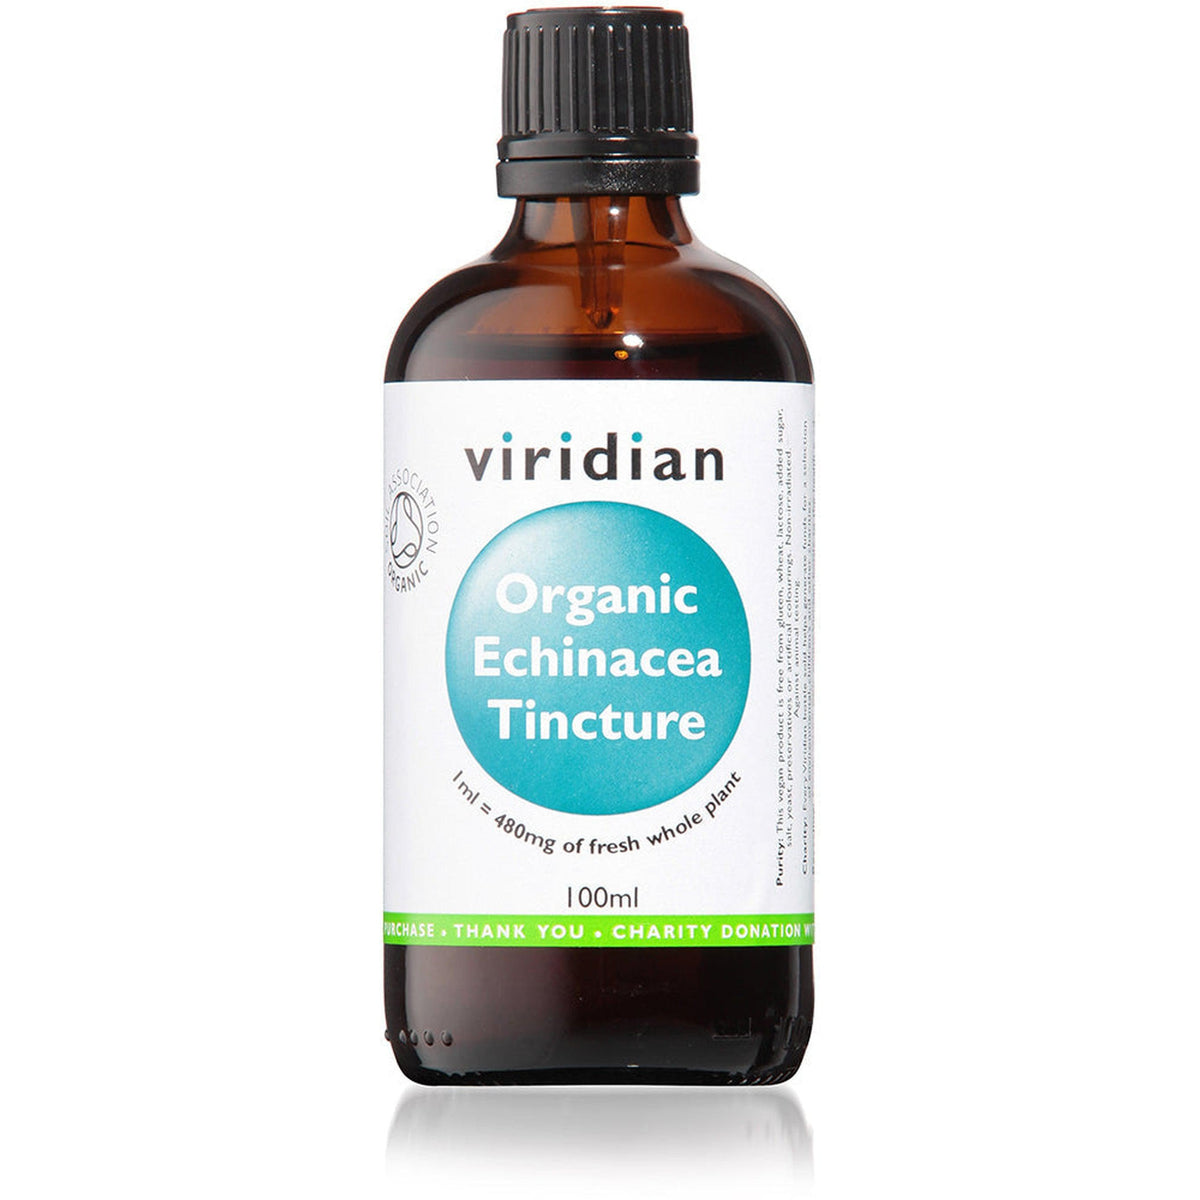 Viridian Organic Echinacea Tincture 100ml- Lillys Pharmacy and Health Store